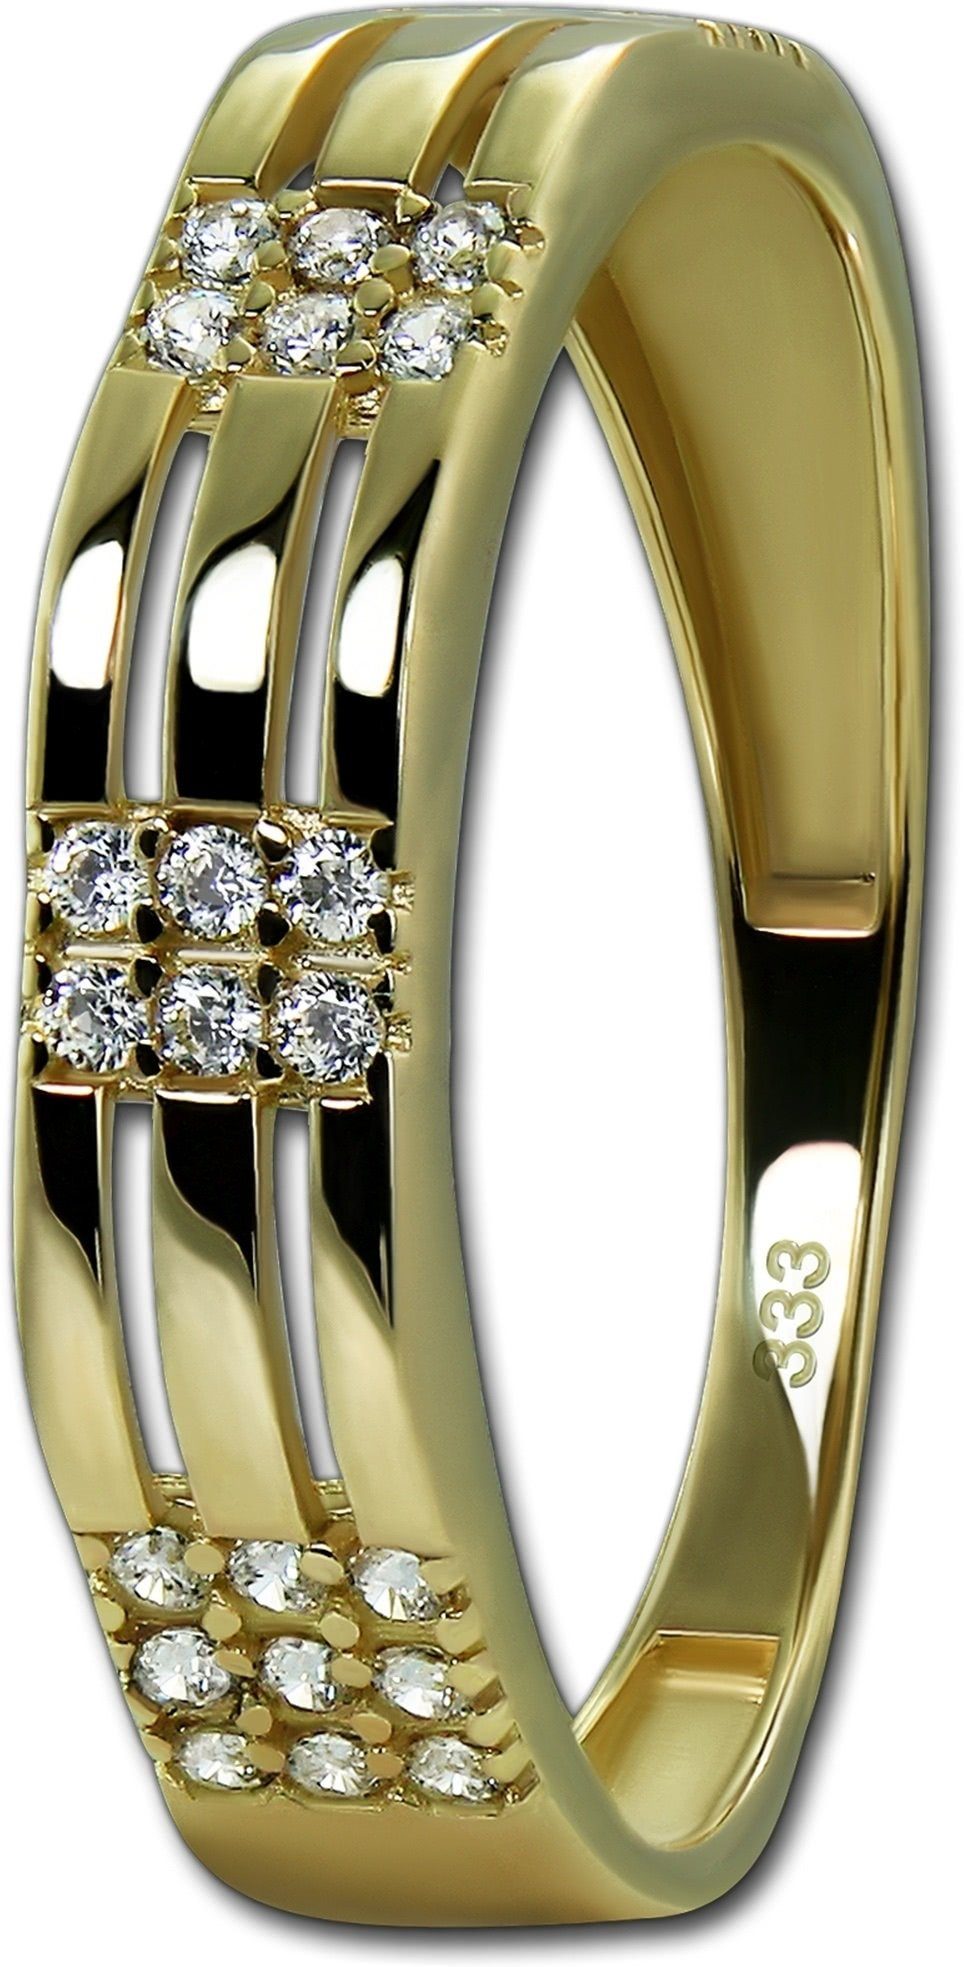 Sparkle Echtgold, GoldDream Gr.56 333er (Fingerring), Damen Gelbgold Ring Goldring gold, weiß Sparkle Gold Ring GoldDream